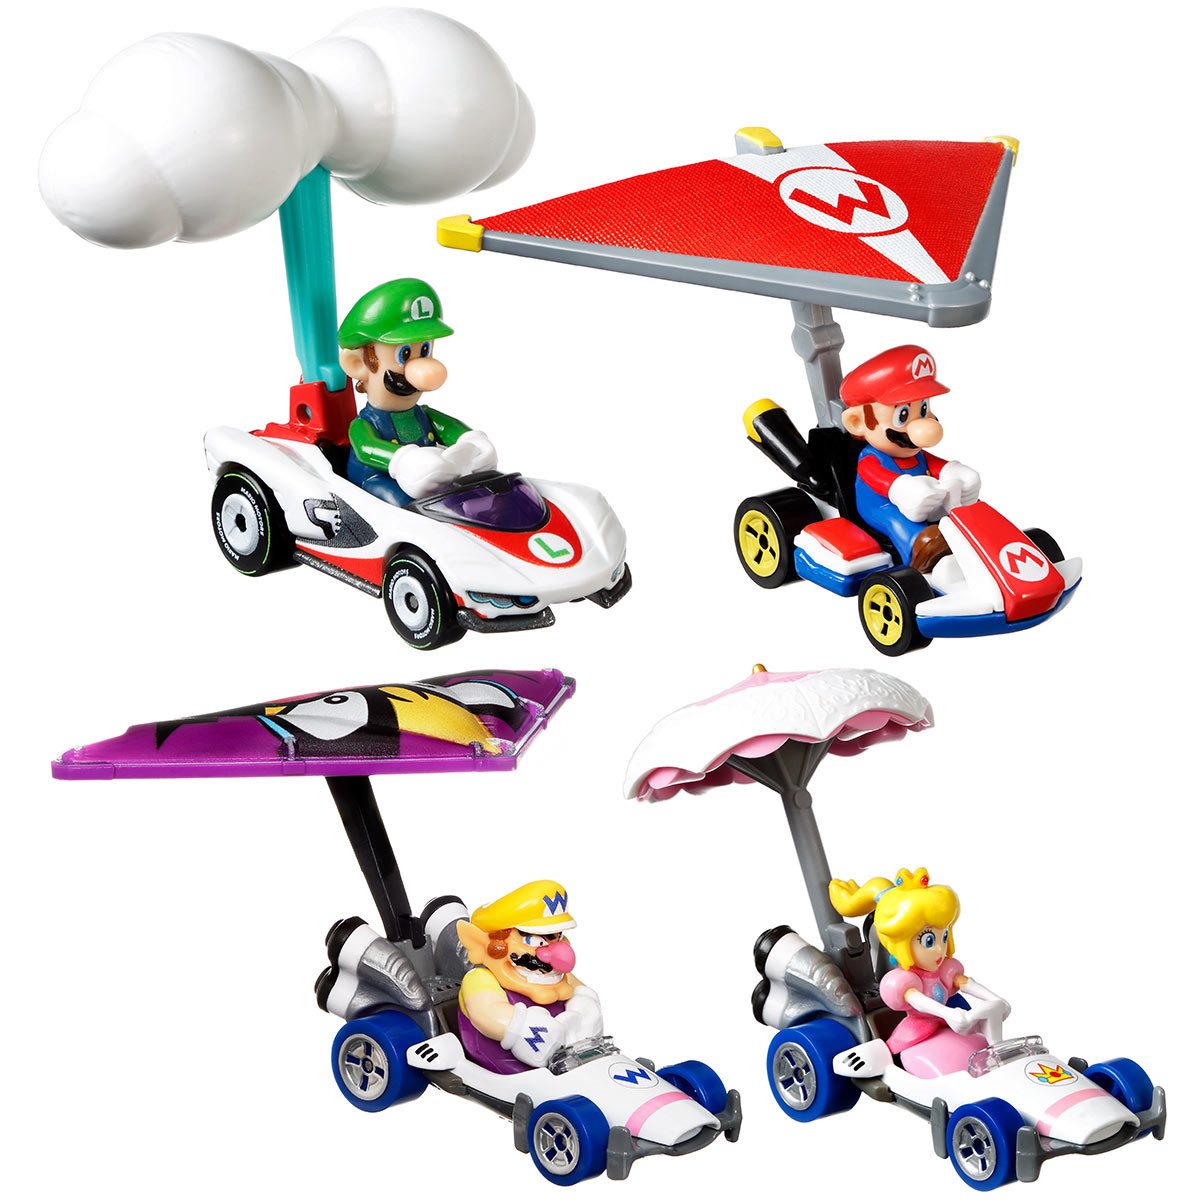 Mario Kart Hot Wheels Die-Cast Wave 2 Four-Pack Mix 1